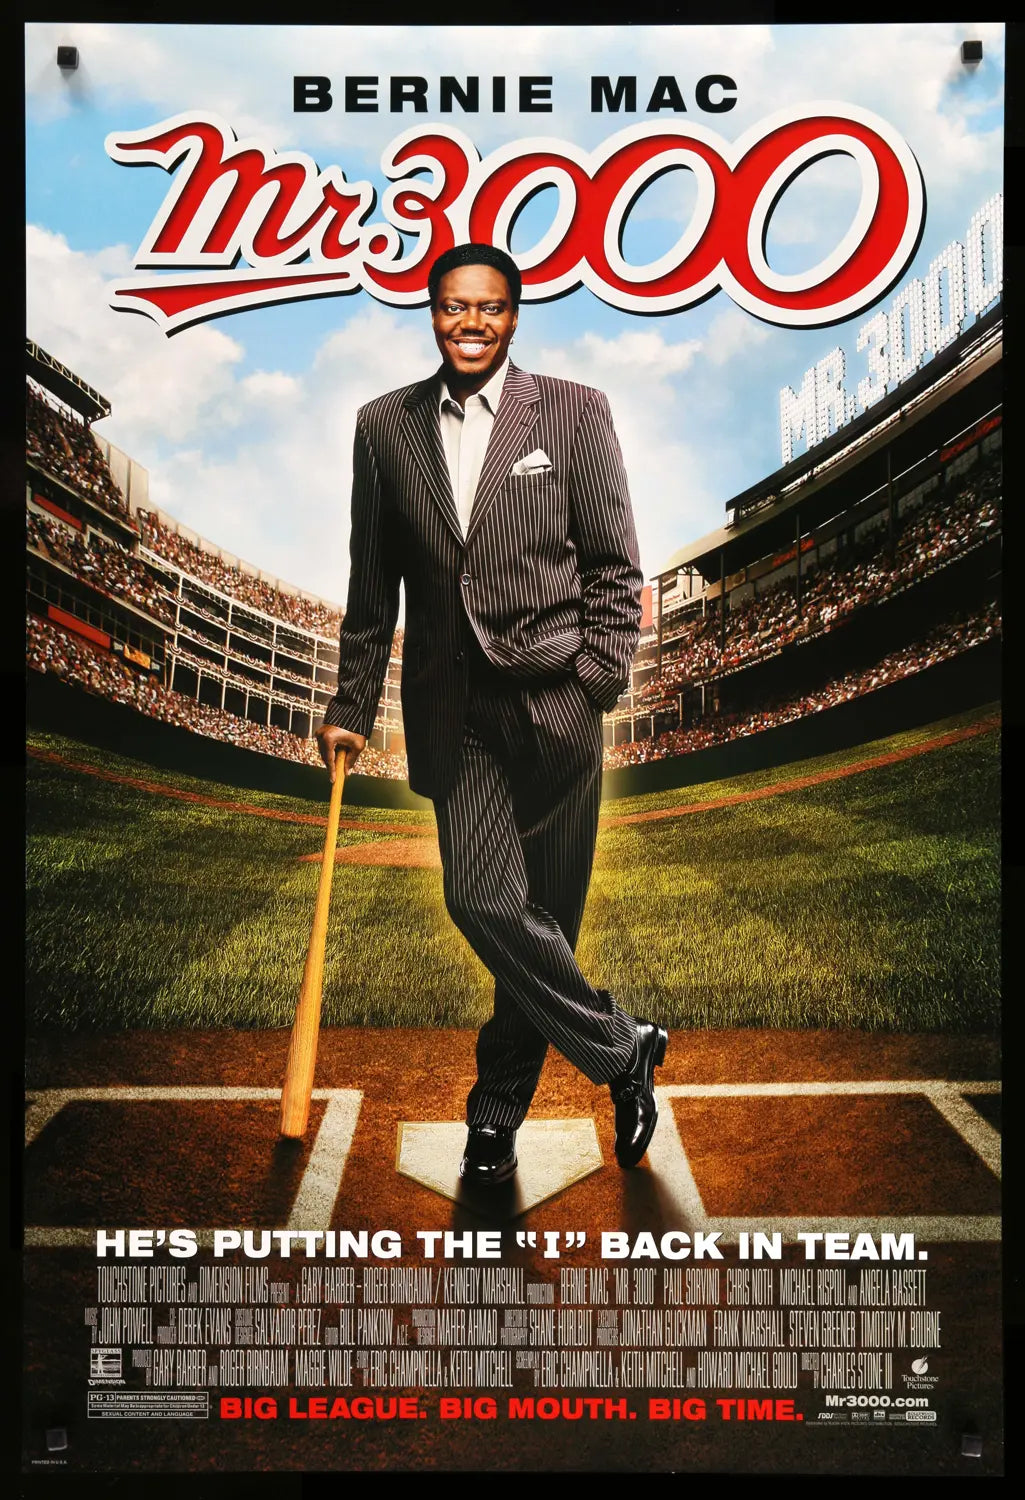 Mr. 3000 (2004) original movie poster for sale at Original Film Art